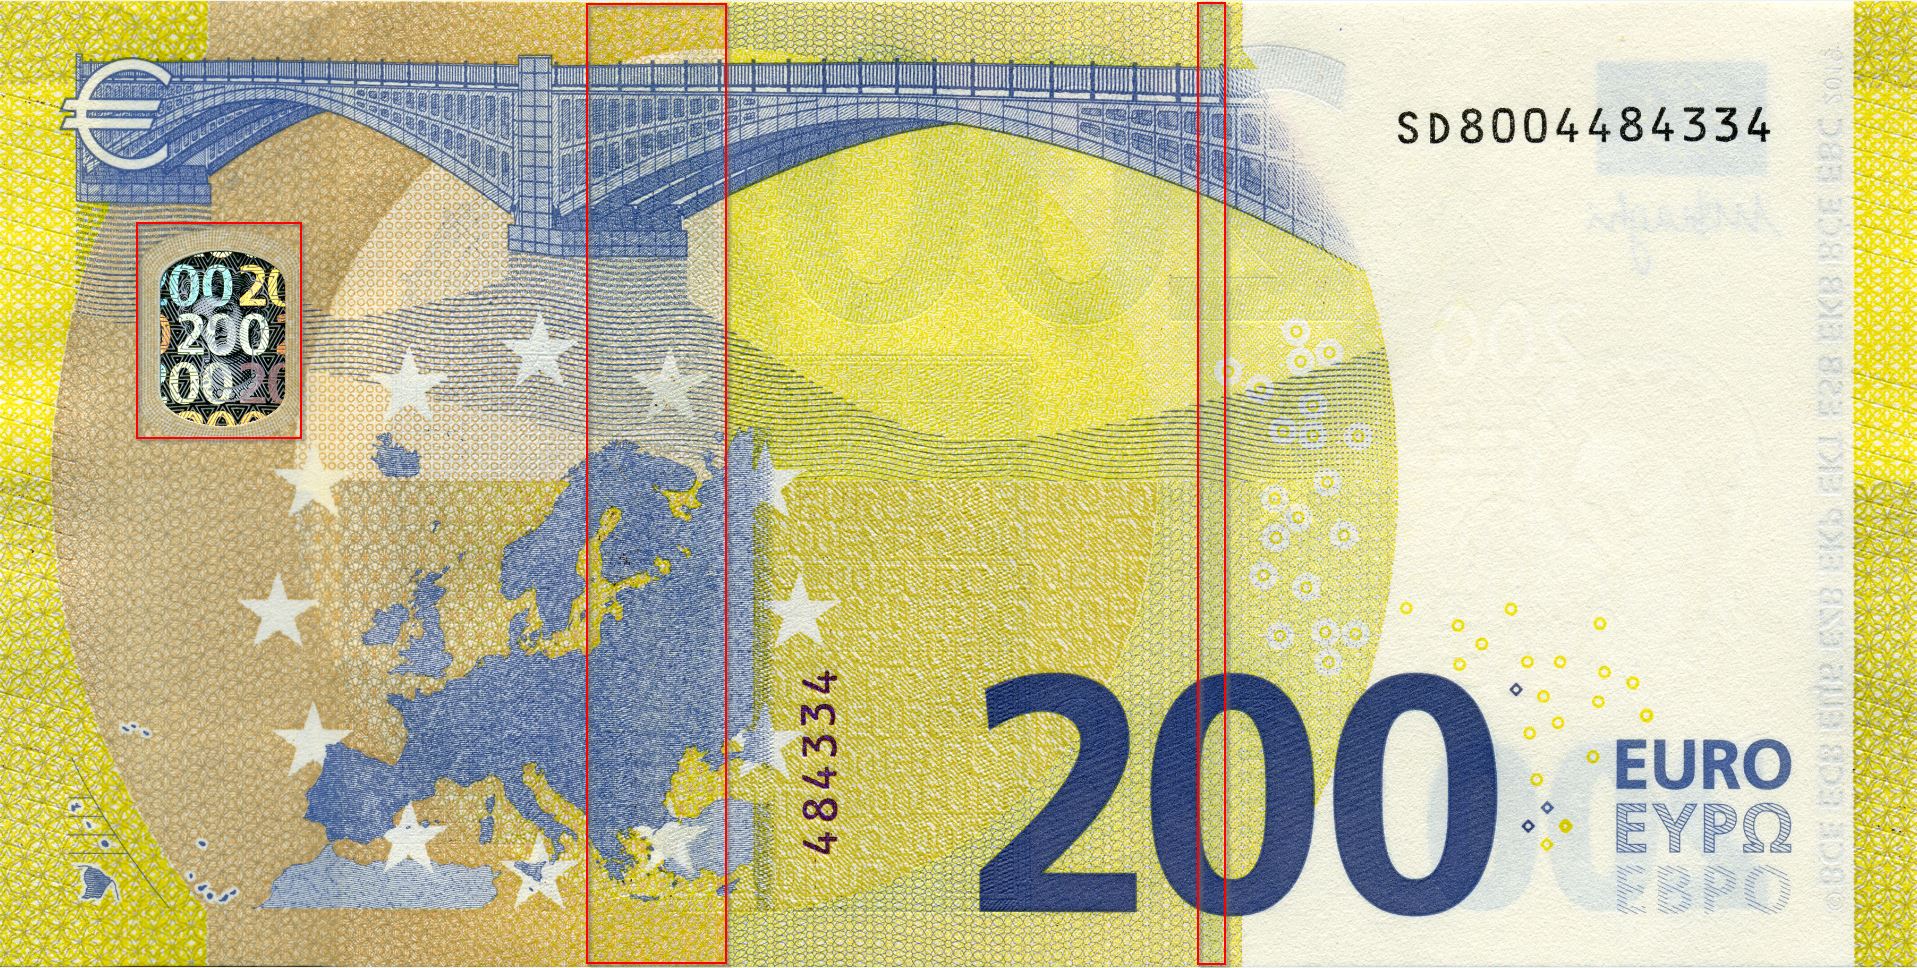 200 euro banknote Europa series - reverse side